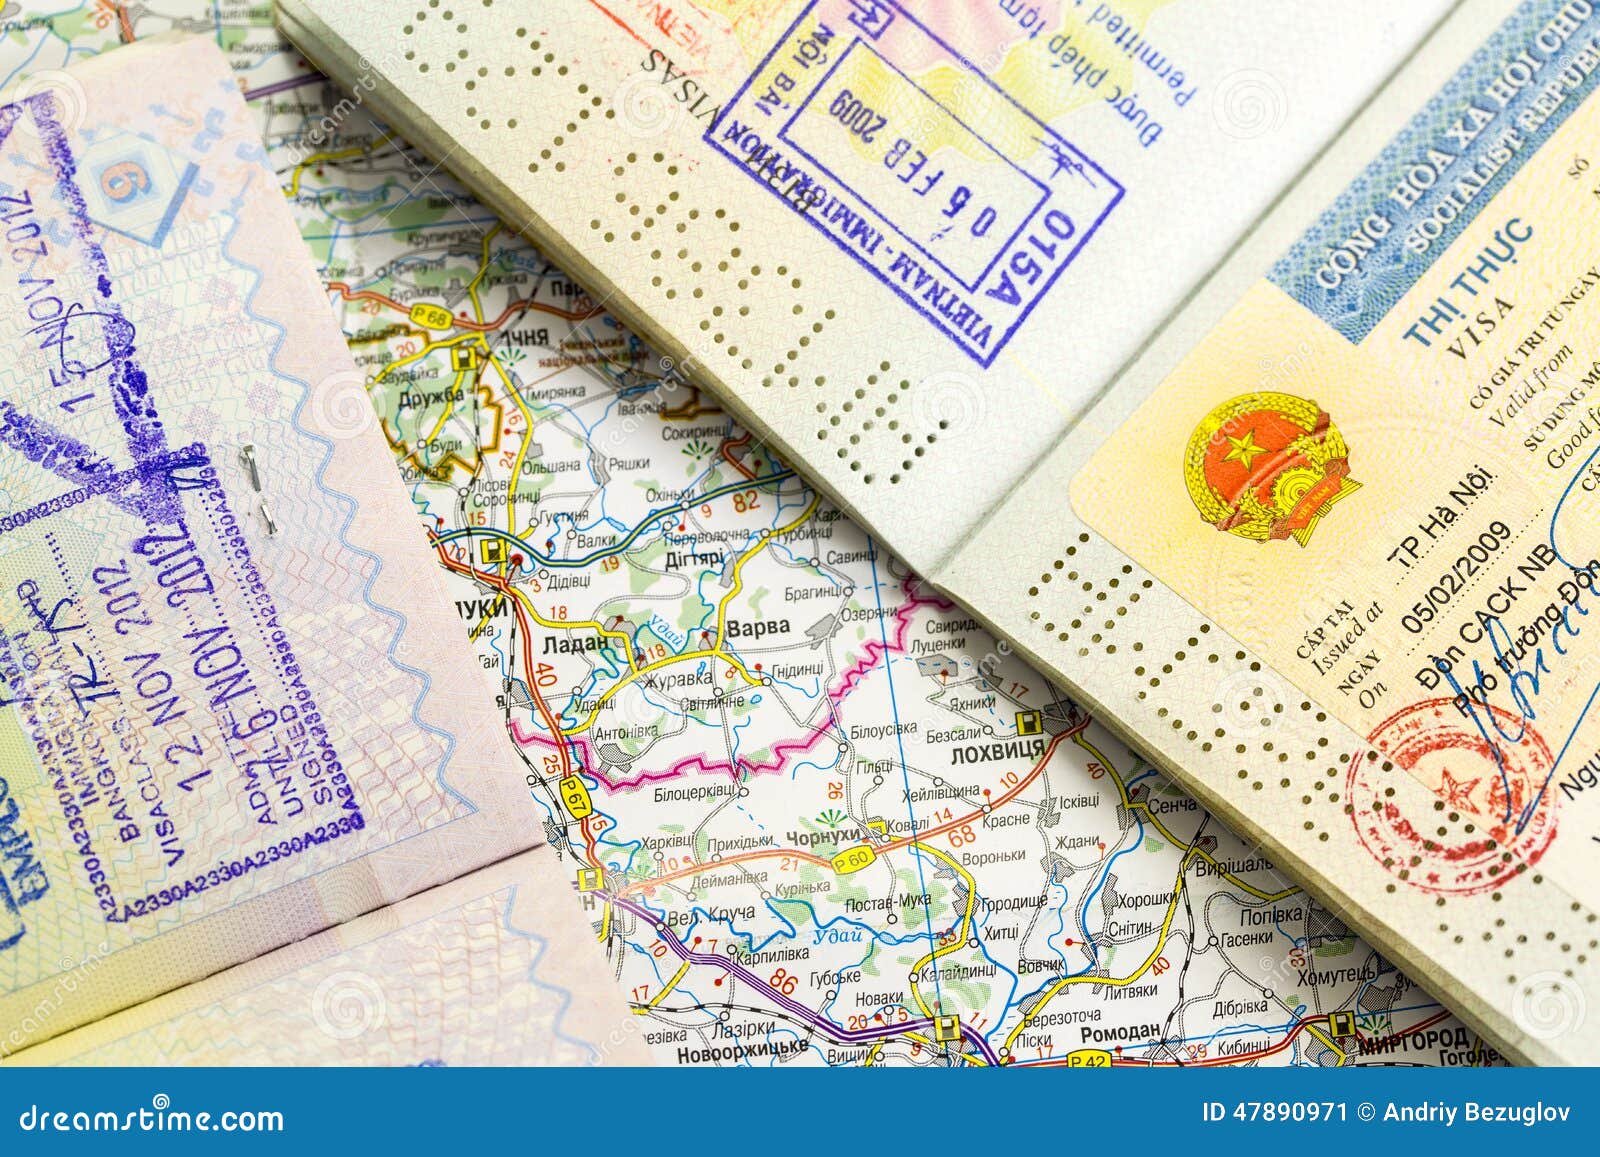 How to Get Vietnam Visa in Bangkok, Thailand?  Vietnam Visa Requirements, Process, and Tips